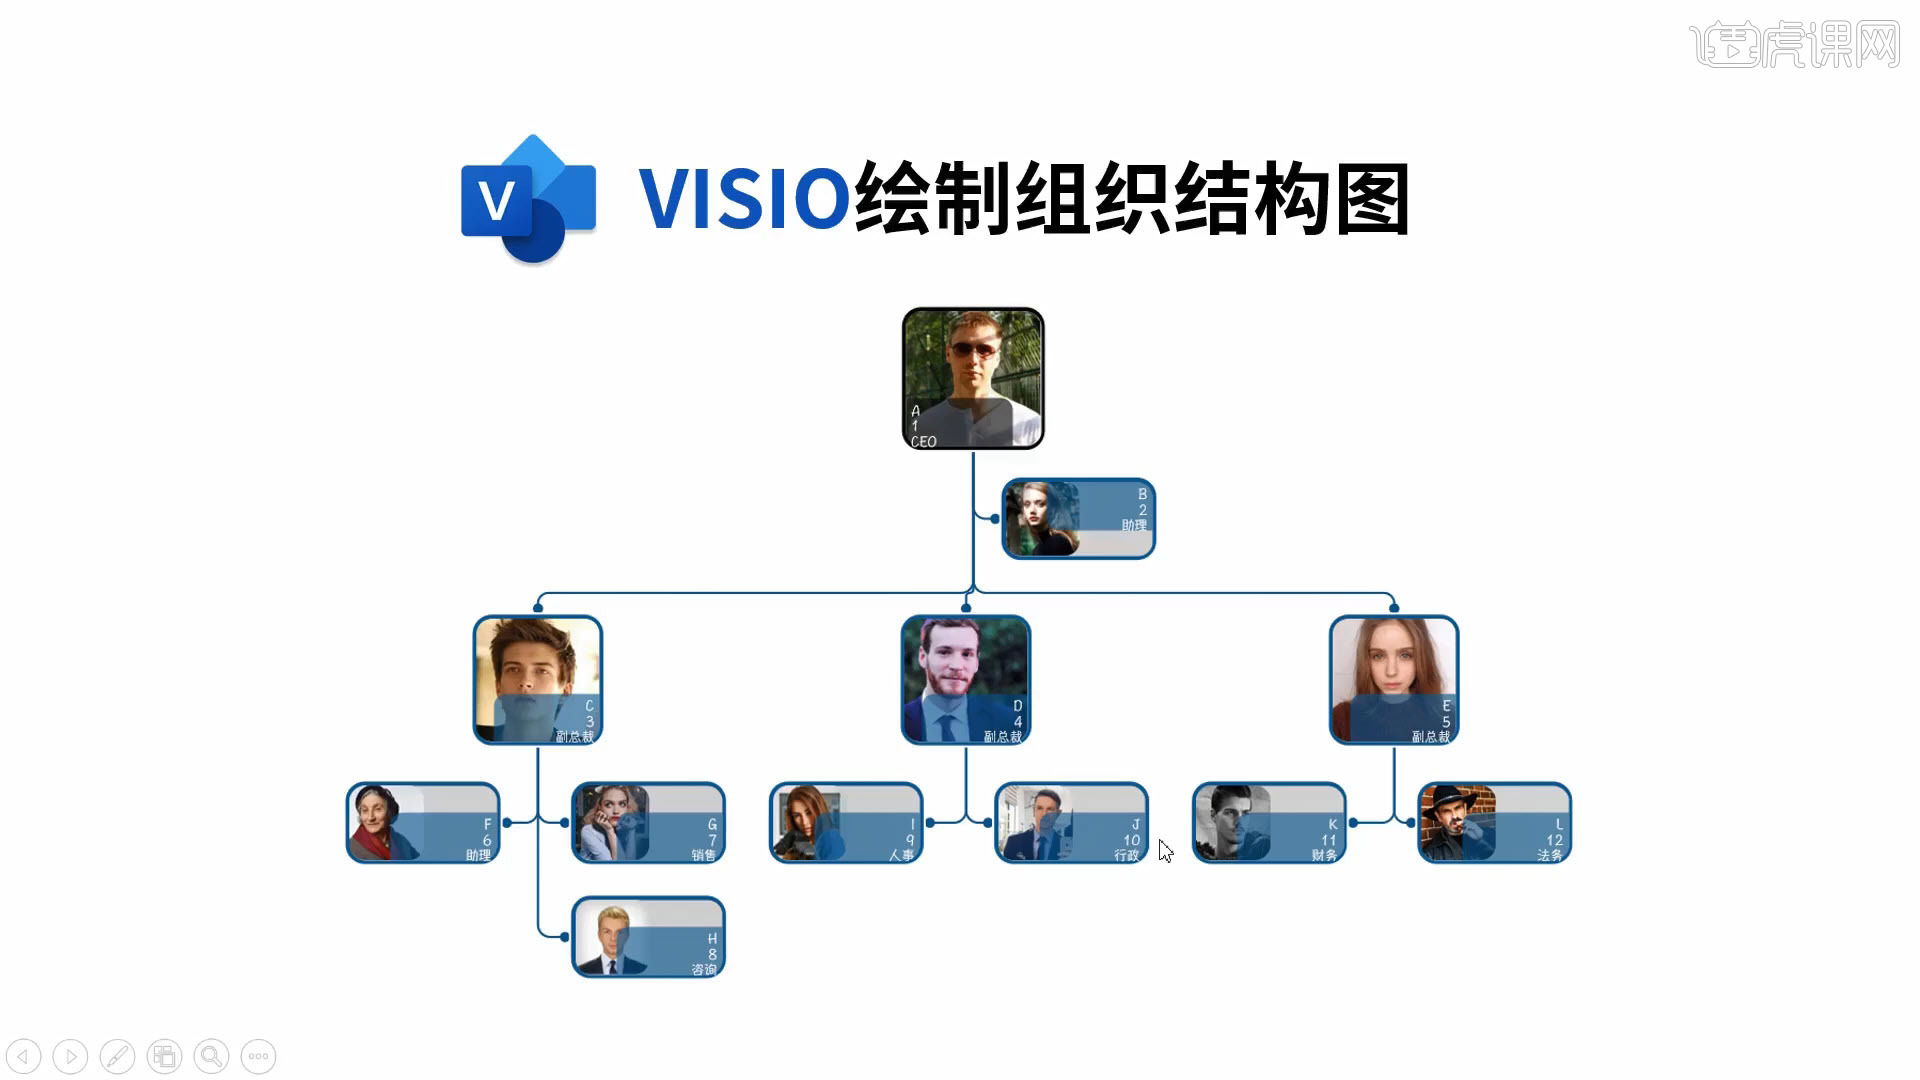 visio画组织架构图教程图片